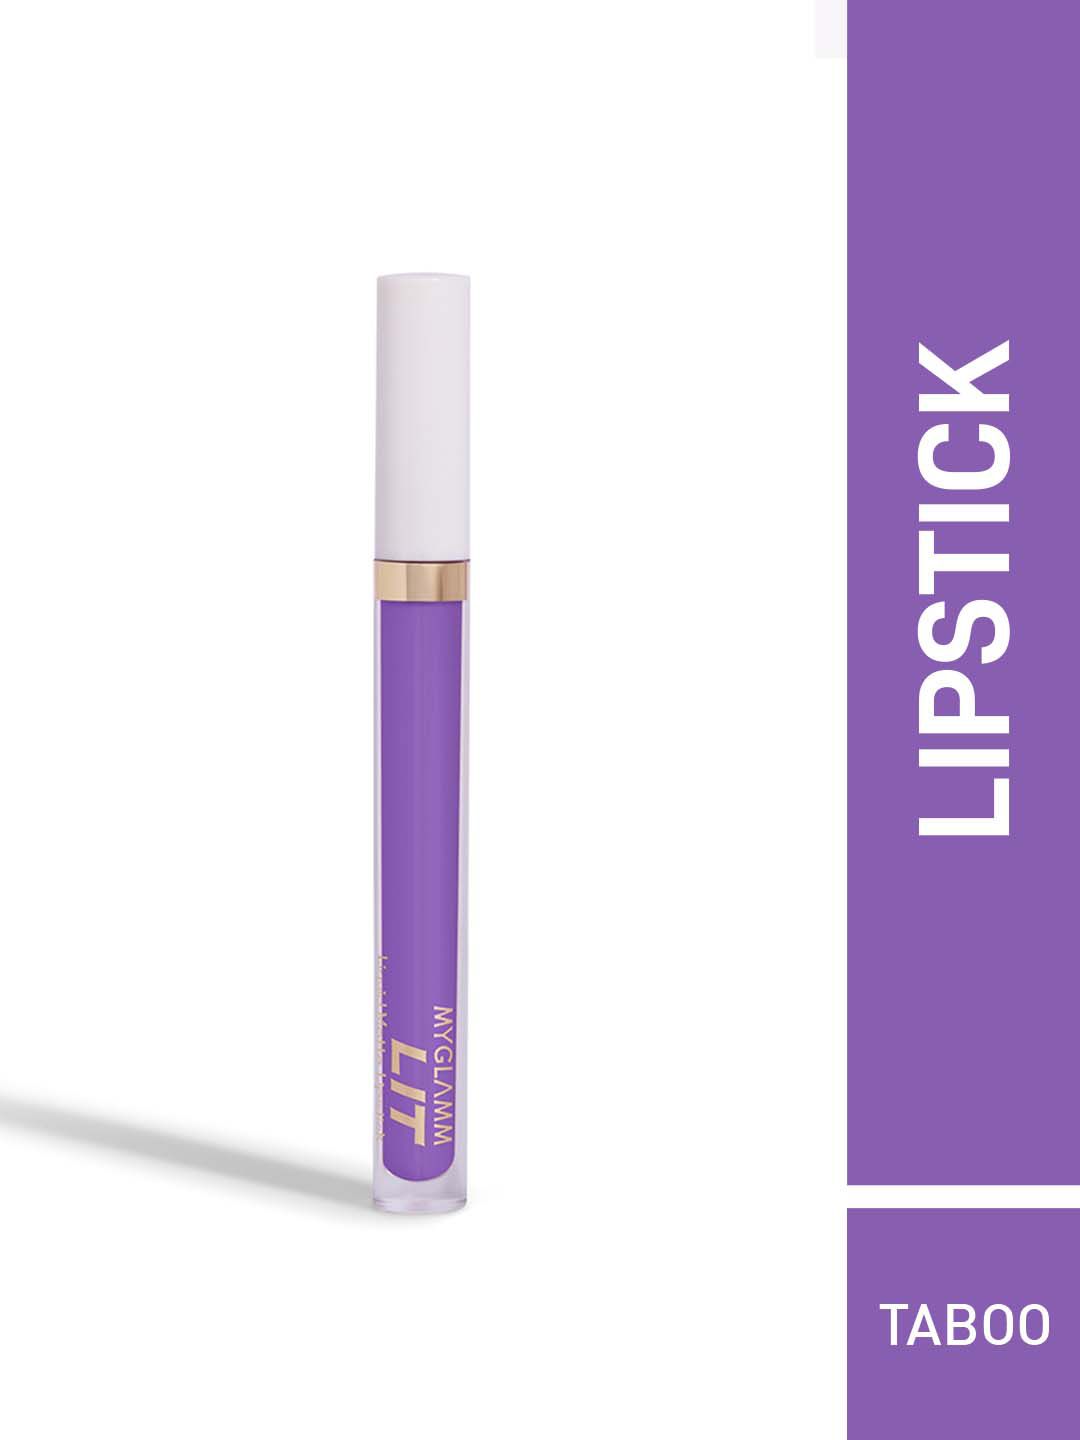 MyGlamm LIT Liquid Matte Lipstick 3 ml - Taboo Price in India